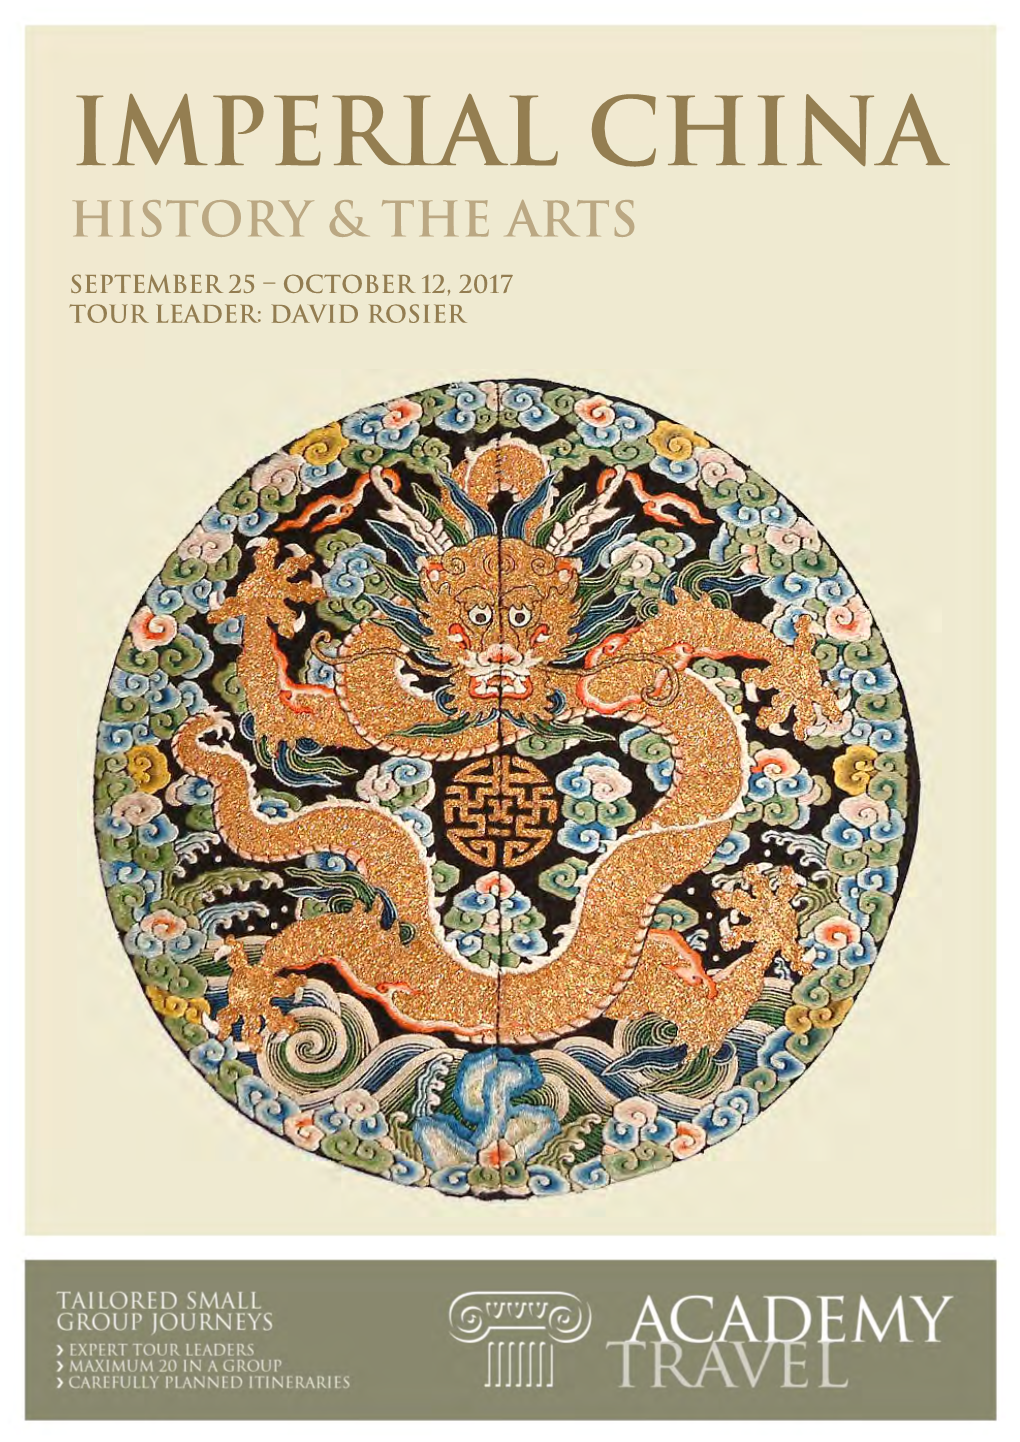 Imperial China History & the Arts